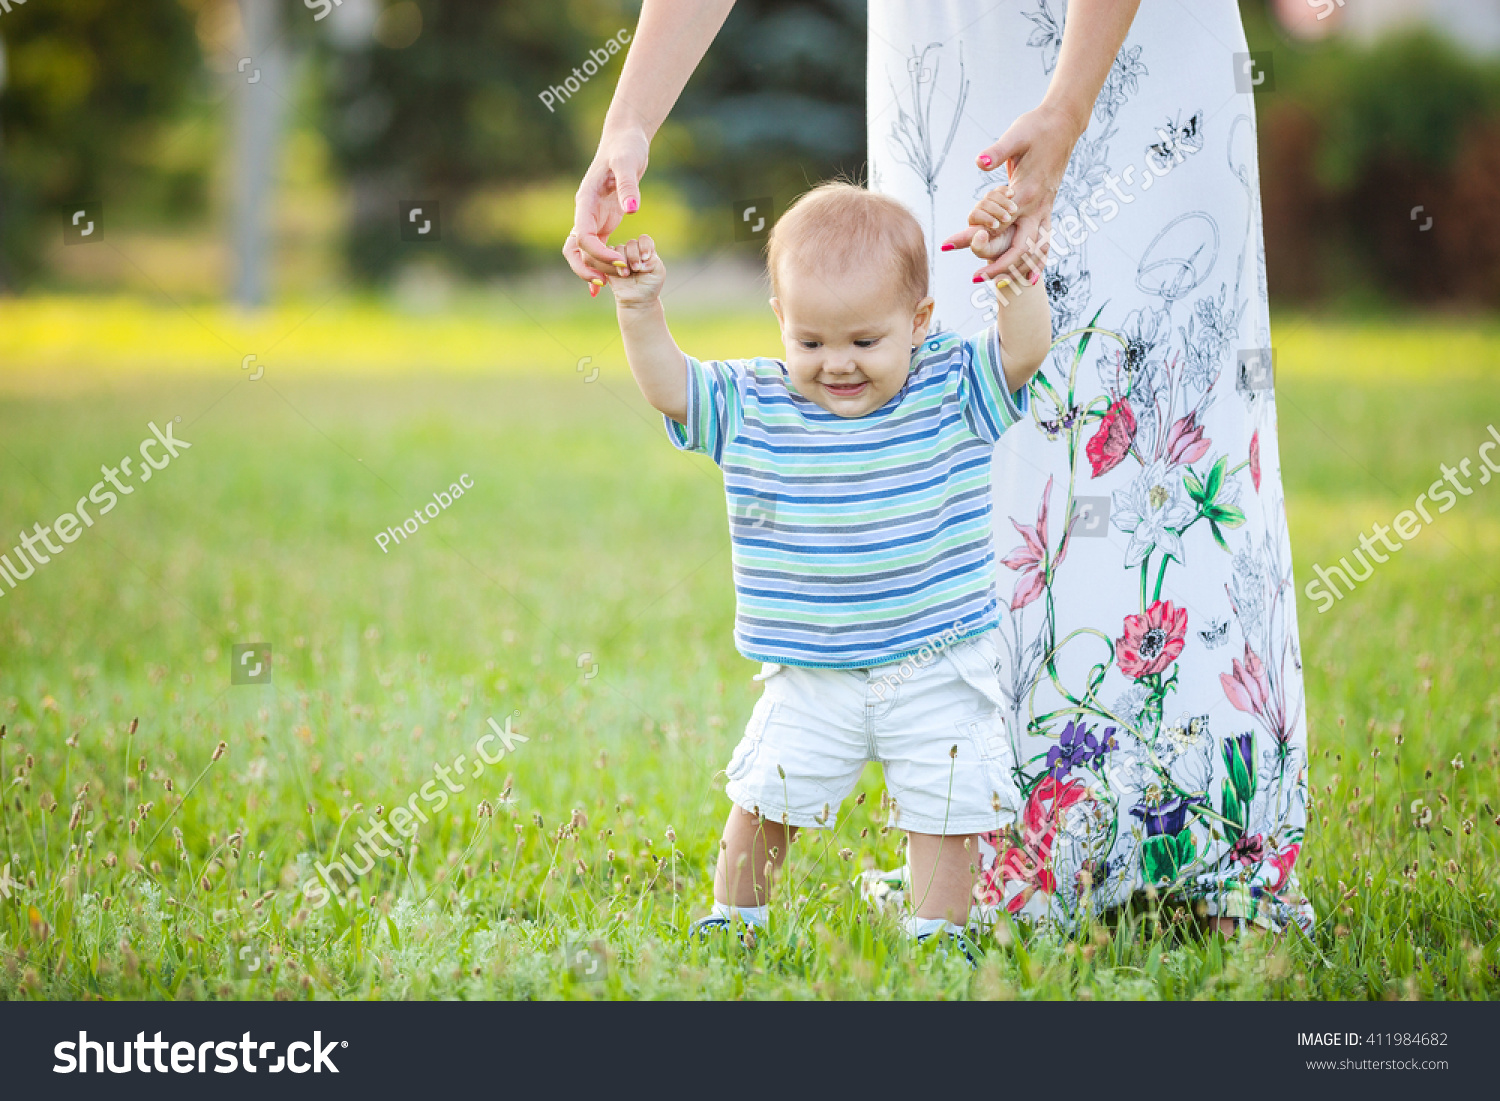 child walking support